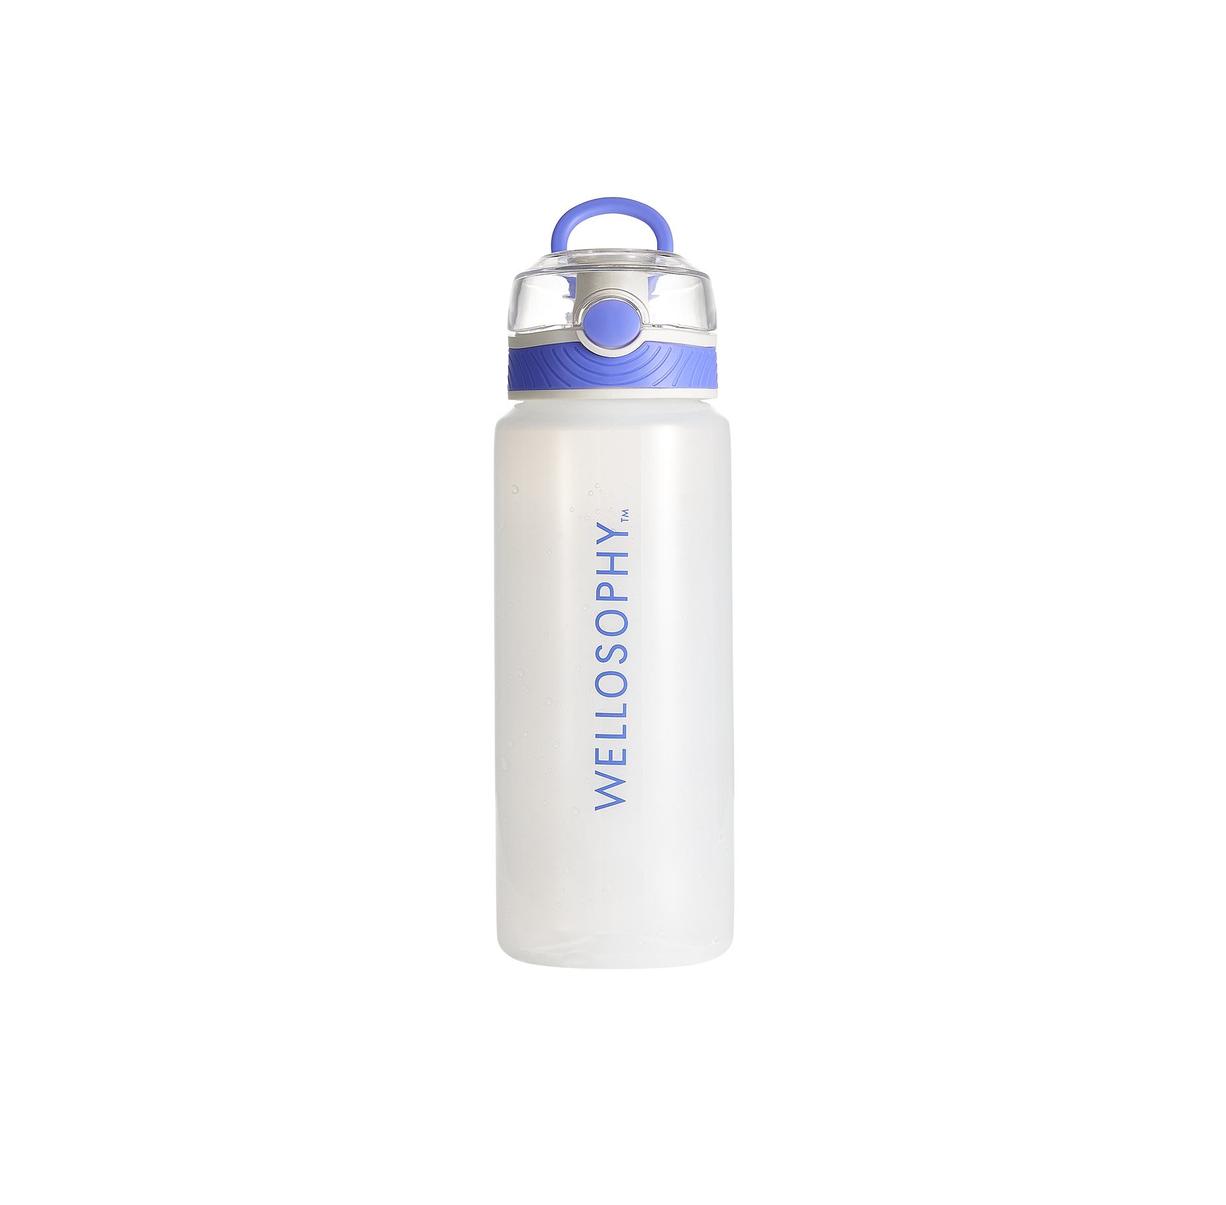 Tilbud: Hydrate Water Bottle kr 249 på Oriflame